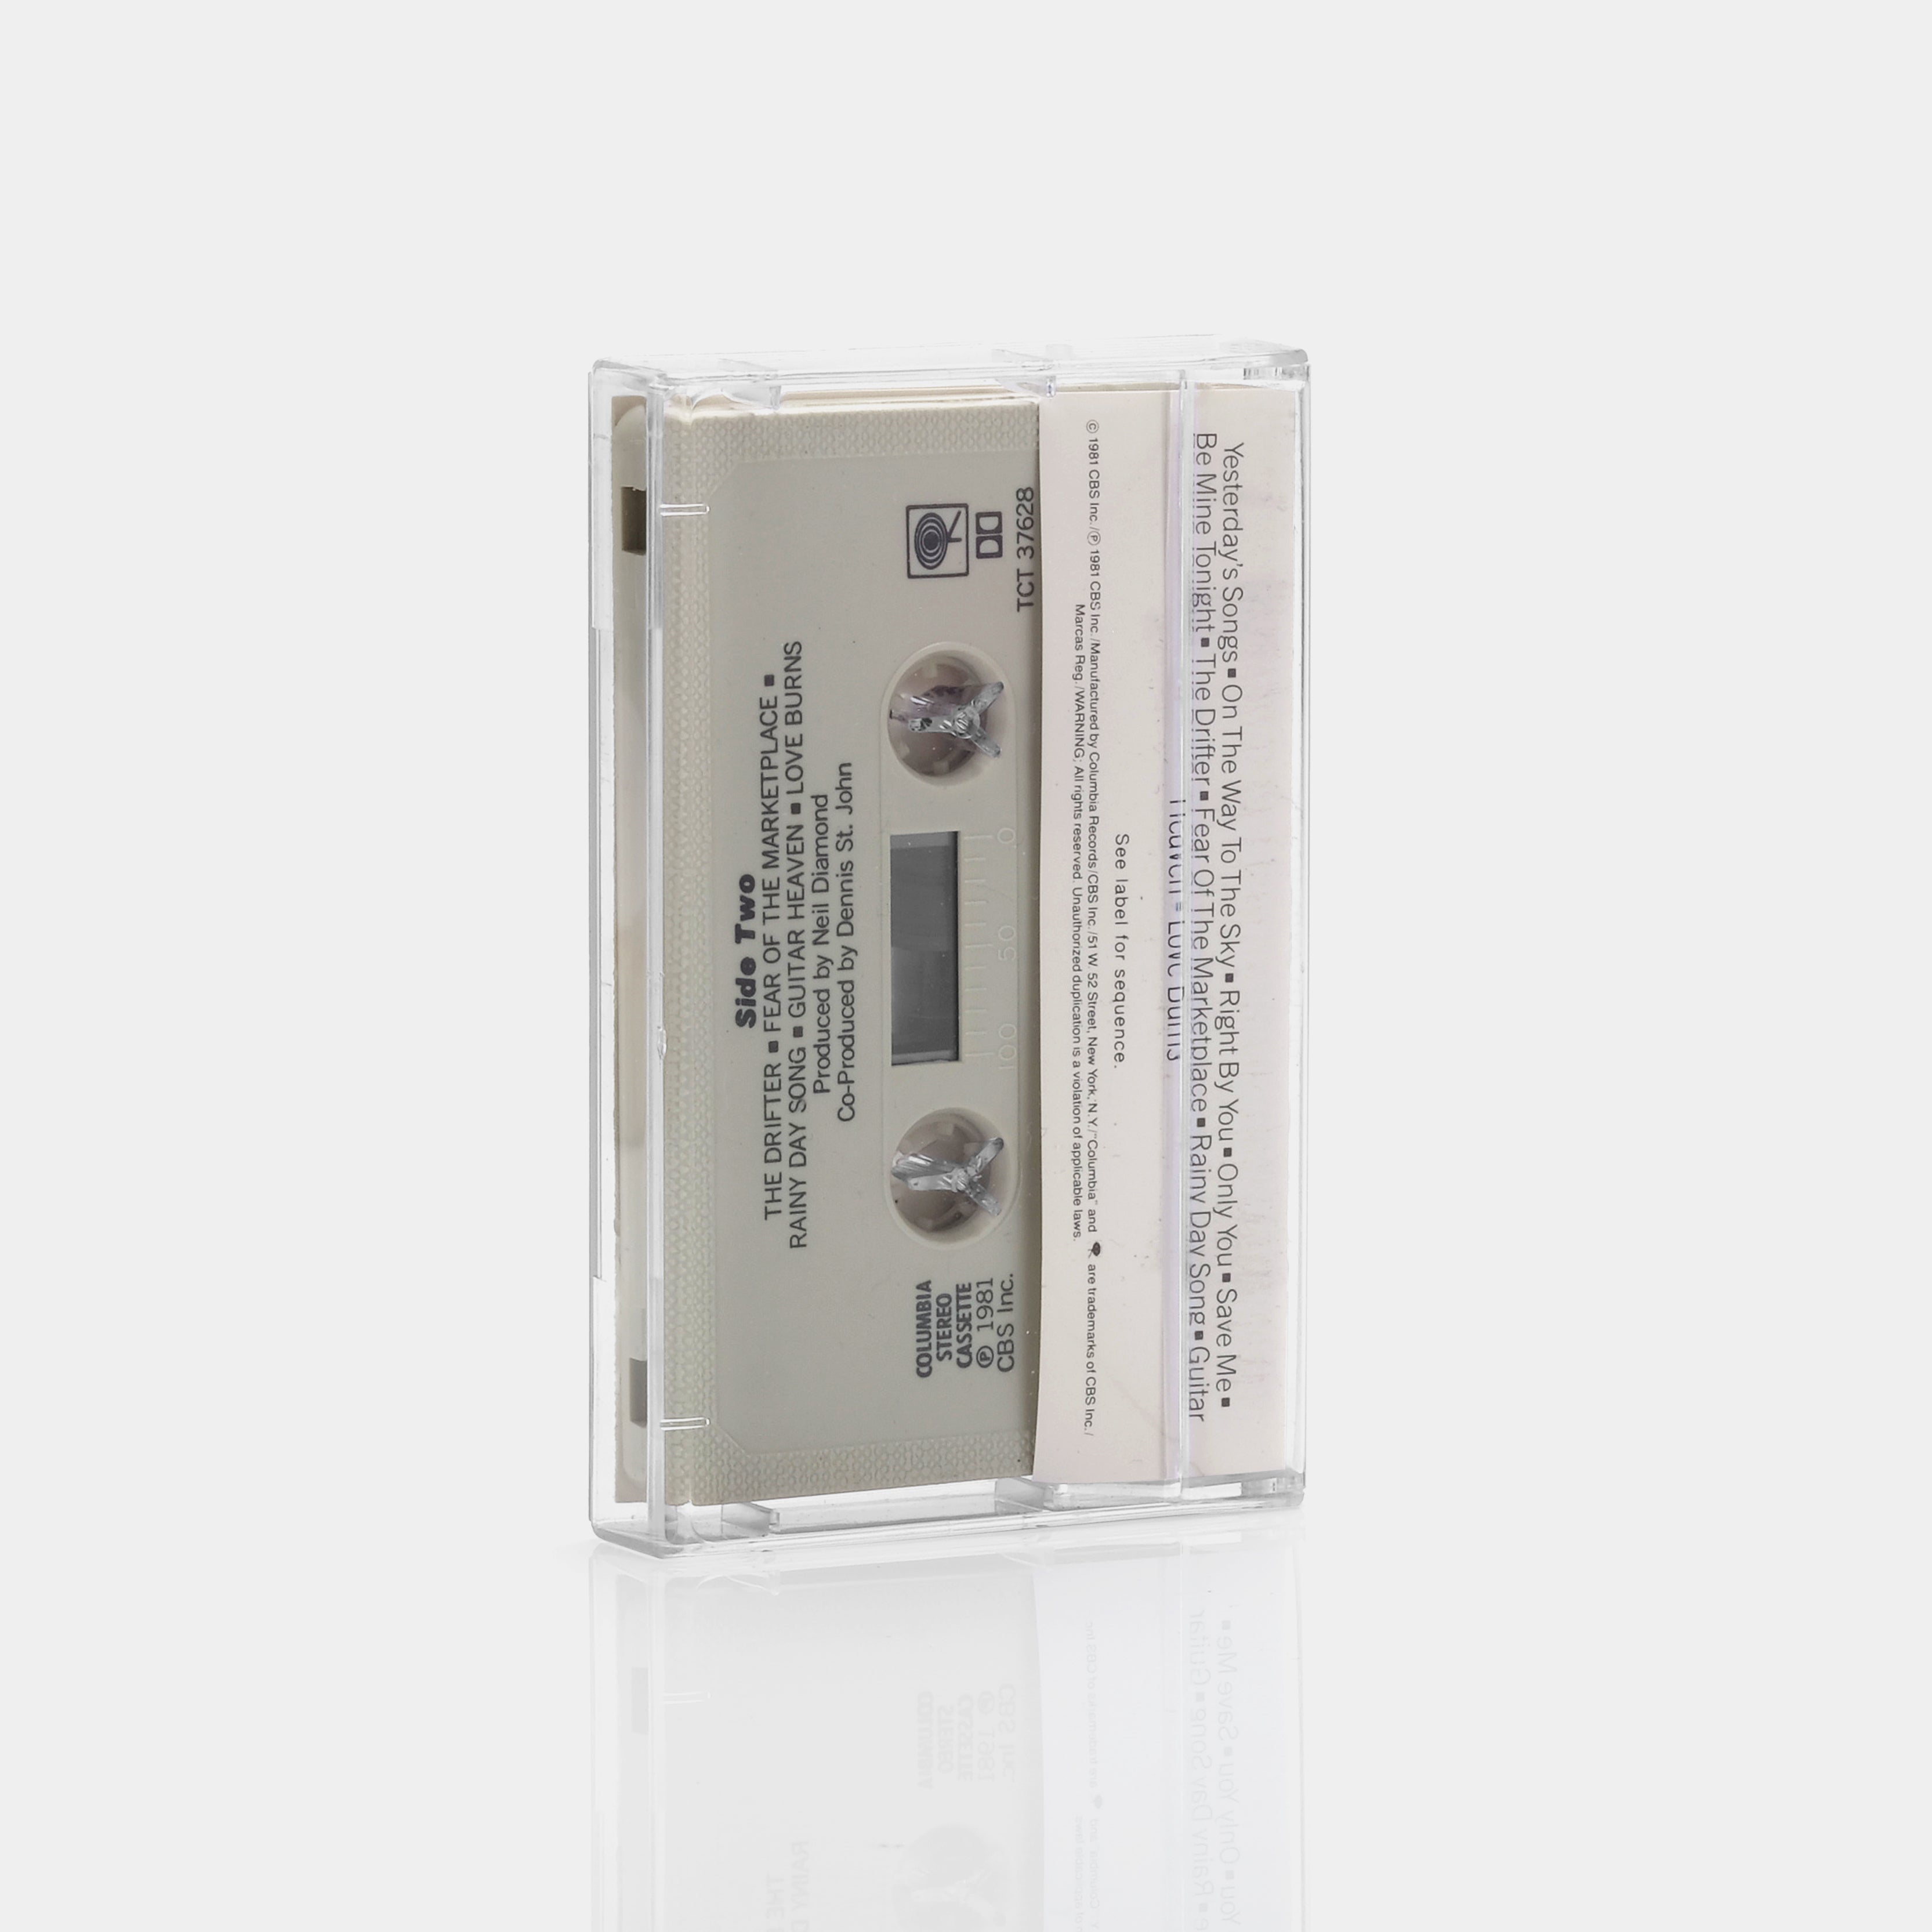 Neil Diamond - On The Way To The Sky Cassette Tape